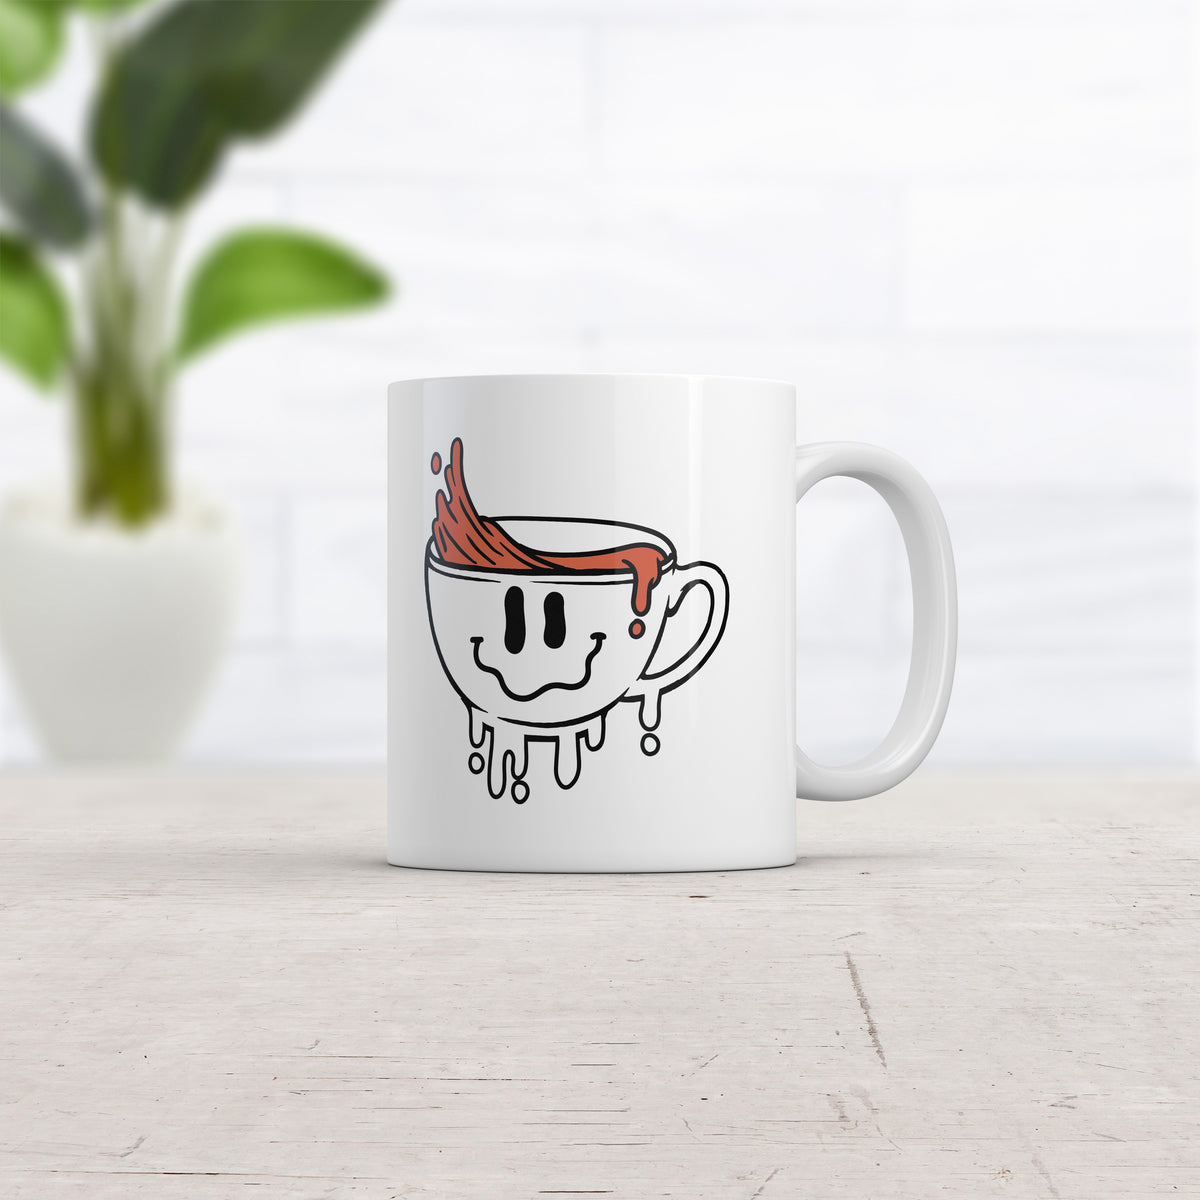 Dripping Melting Smiling Coffee Cup Mug